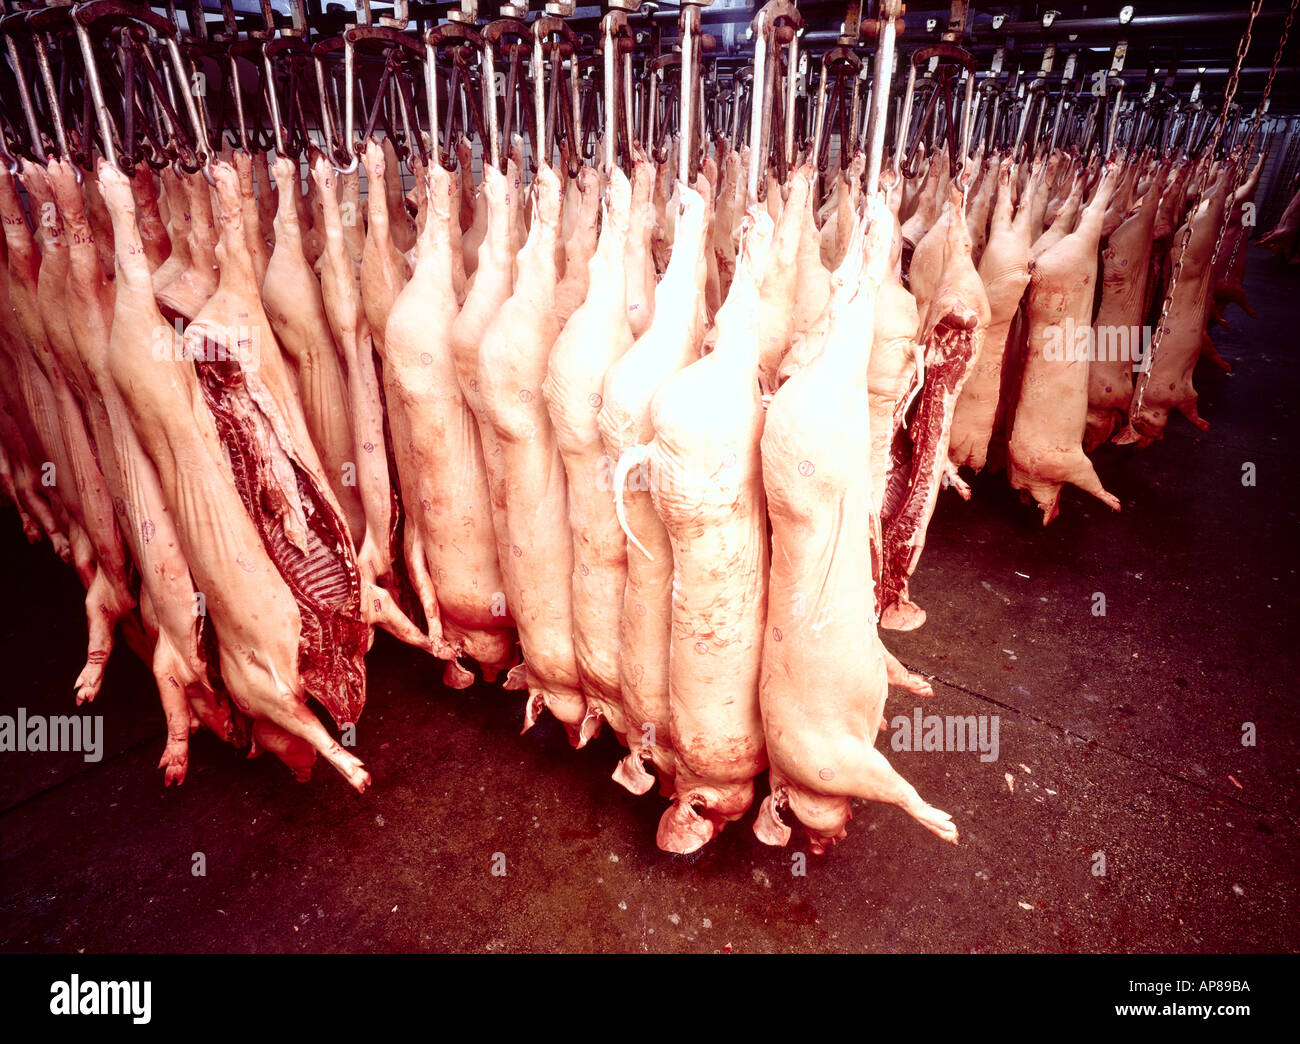 Skinned pigs hanging in slaughterhouse Stock Photo